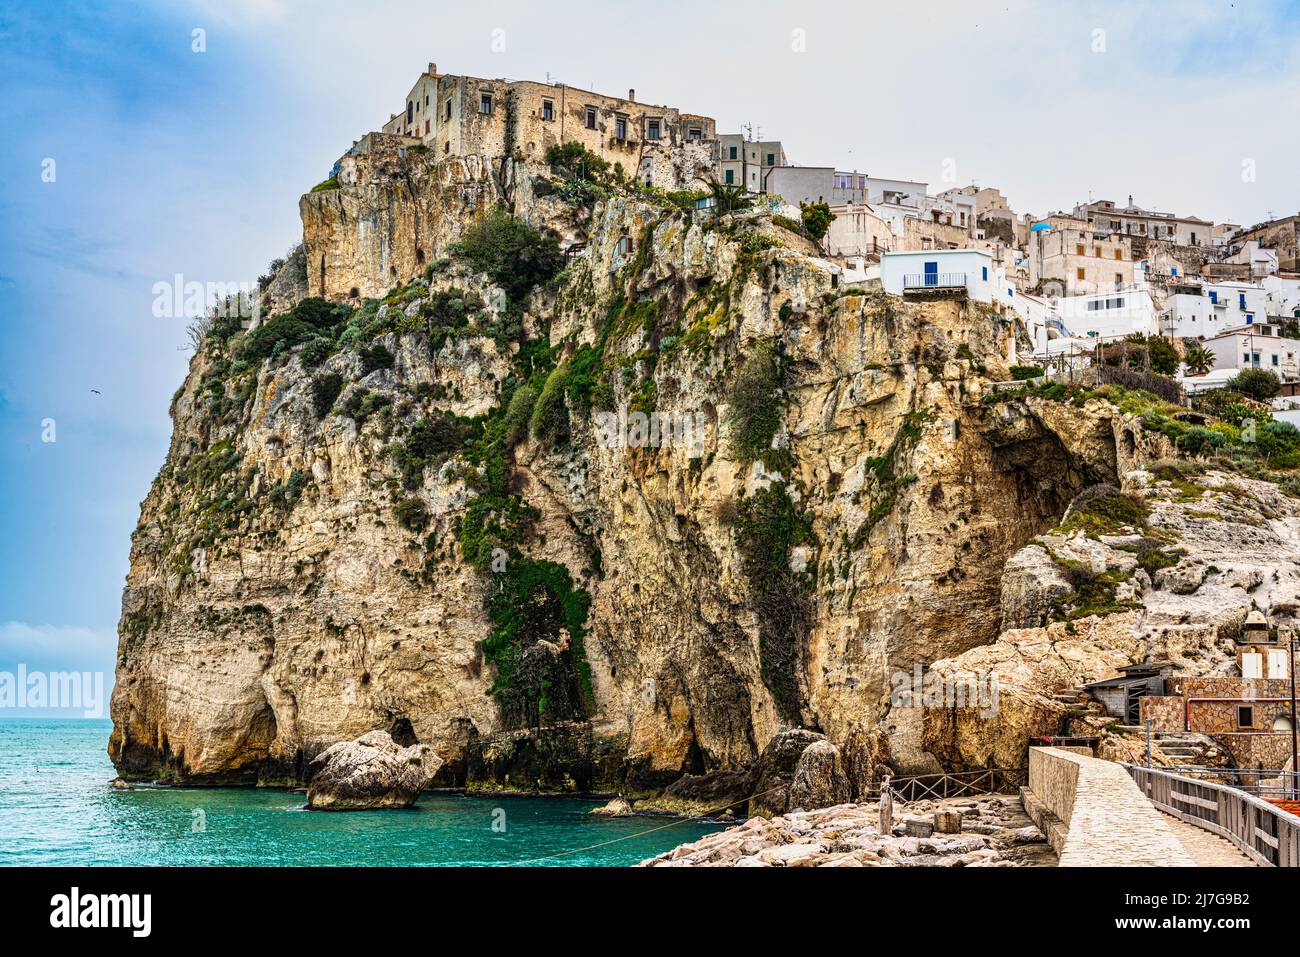 Landscape of the seaside town of Peschici perched on the precipitous cliffs on the Adriatic Sea. Peschici, Foggia province, Puglia, Italy, Europe Stock Photo